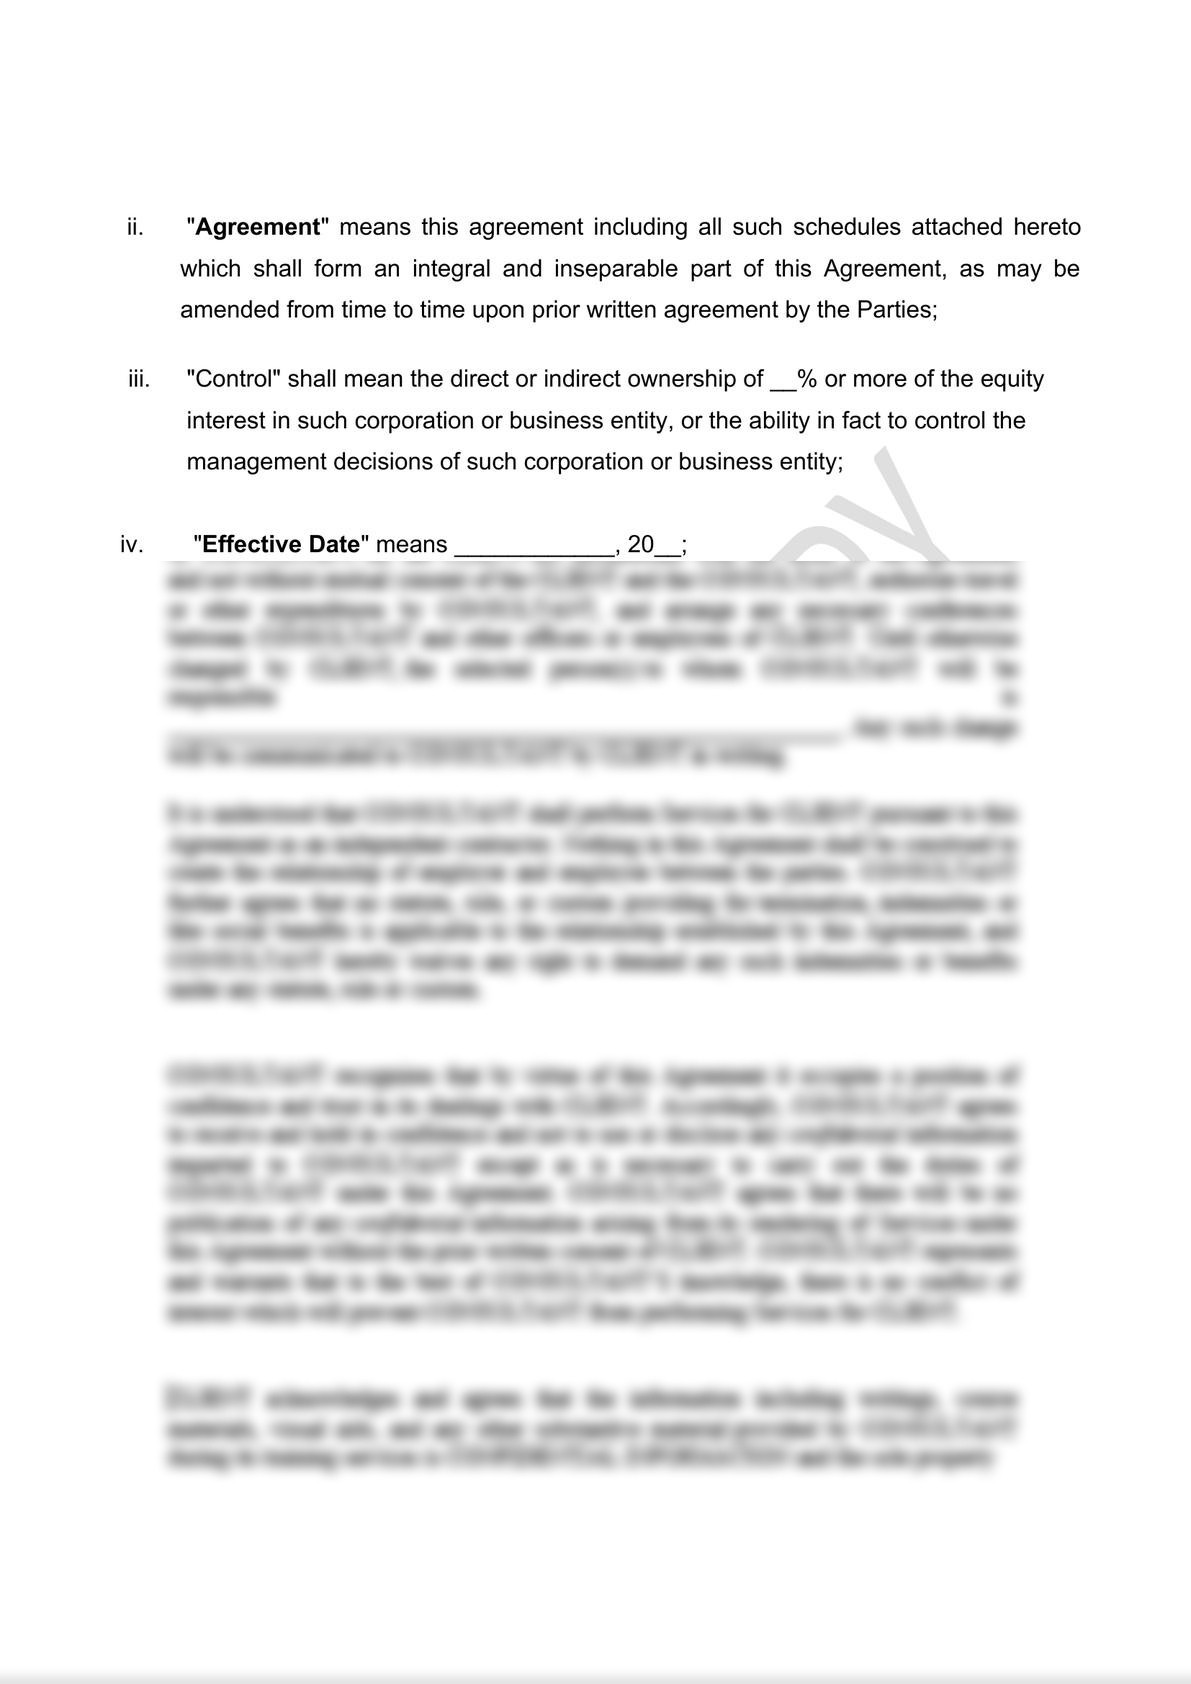 Distribution Agreement Draft (iii)-1